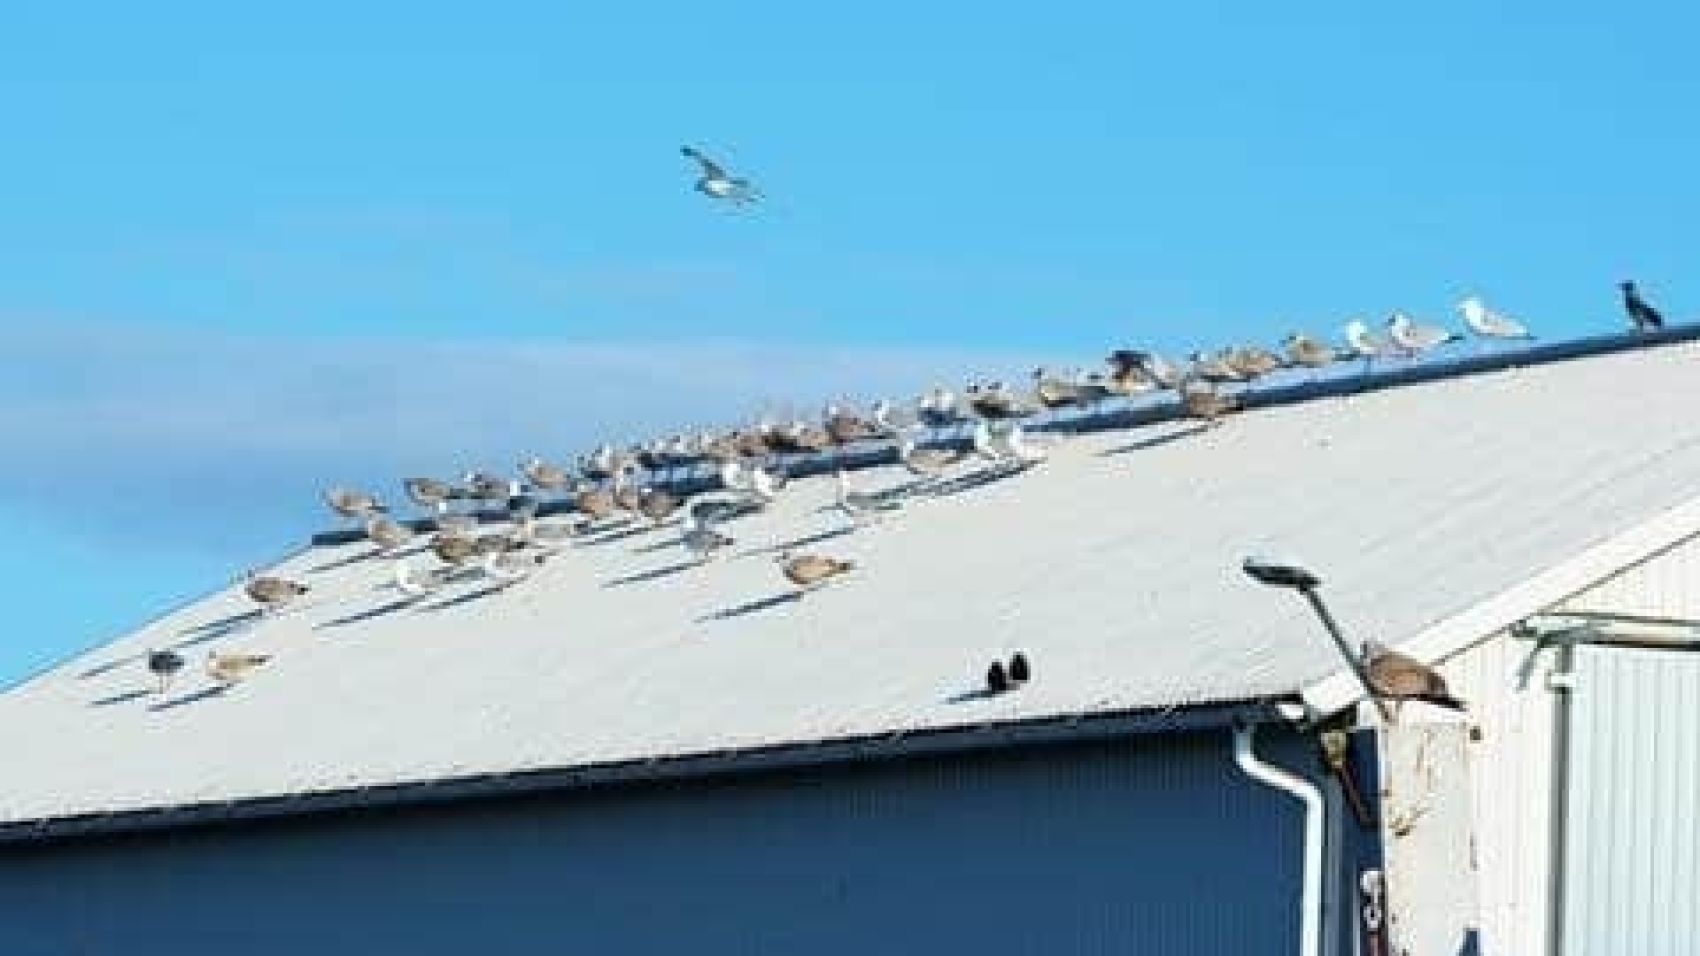 Nuisance Birds Nesting on Roof